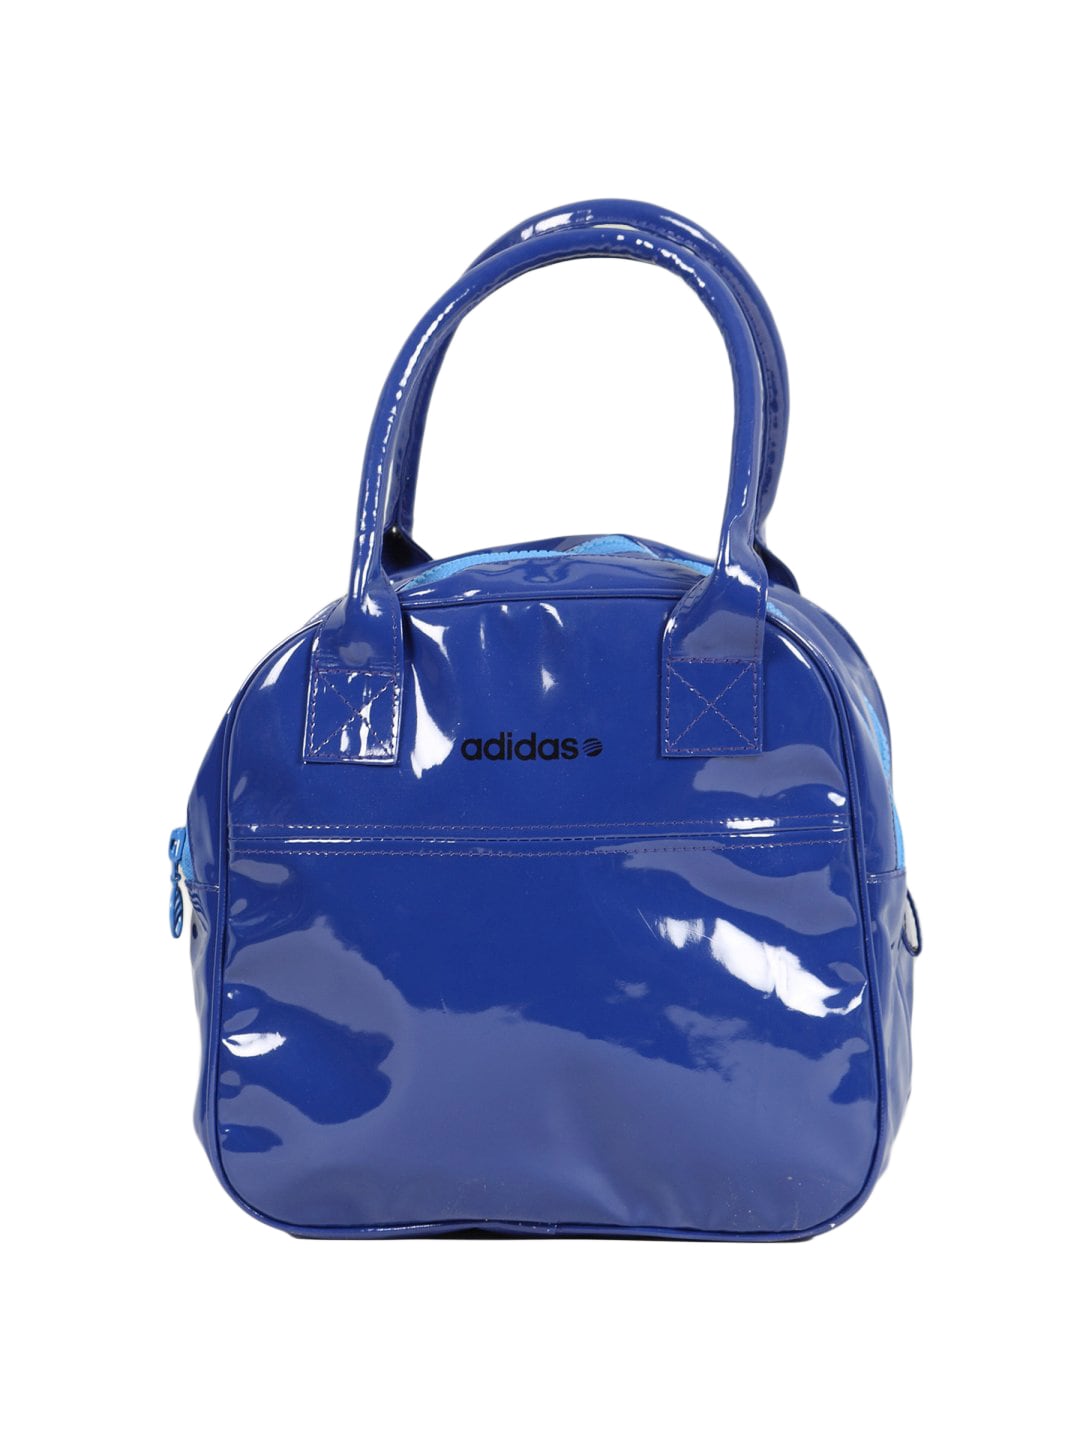 ADIDAS Women Blue Handbag